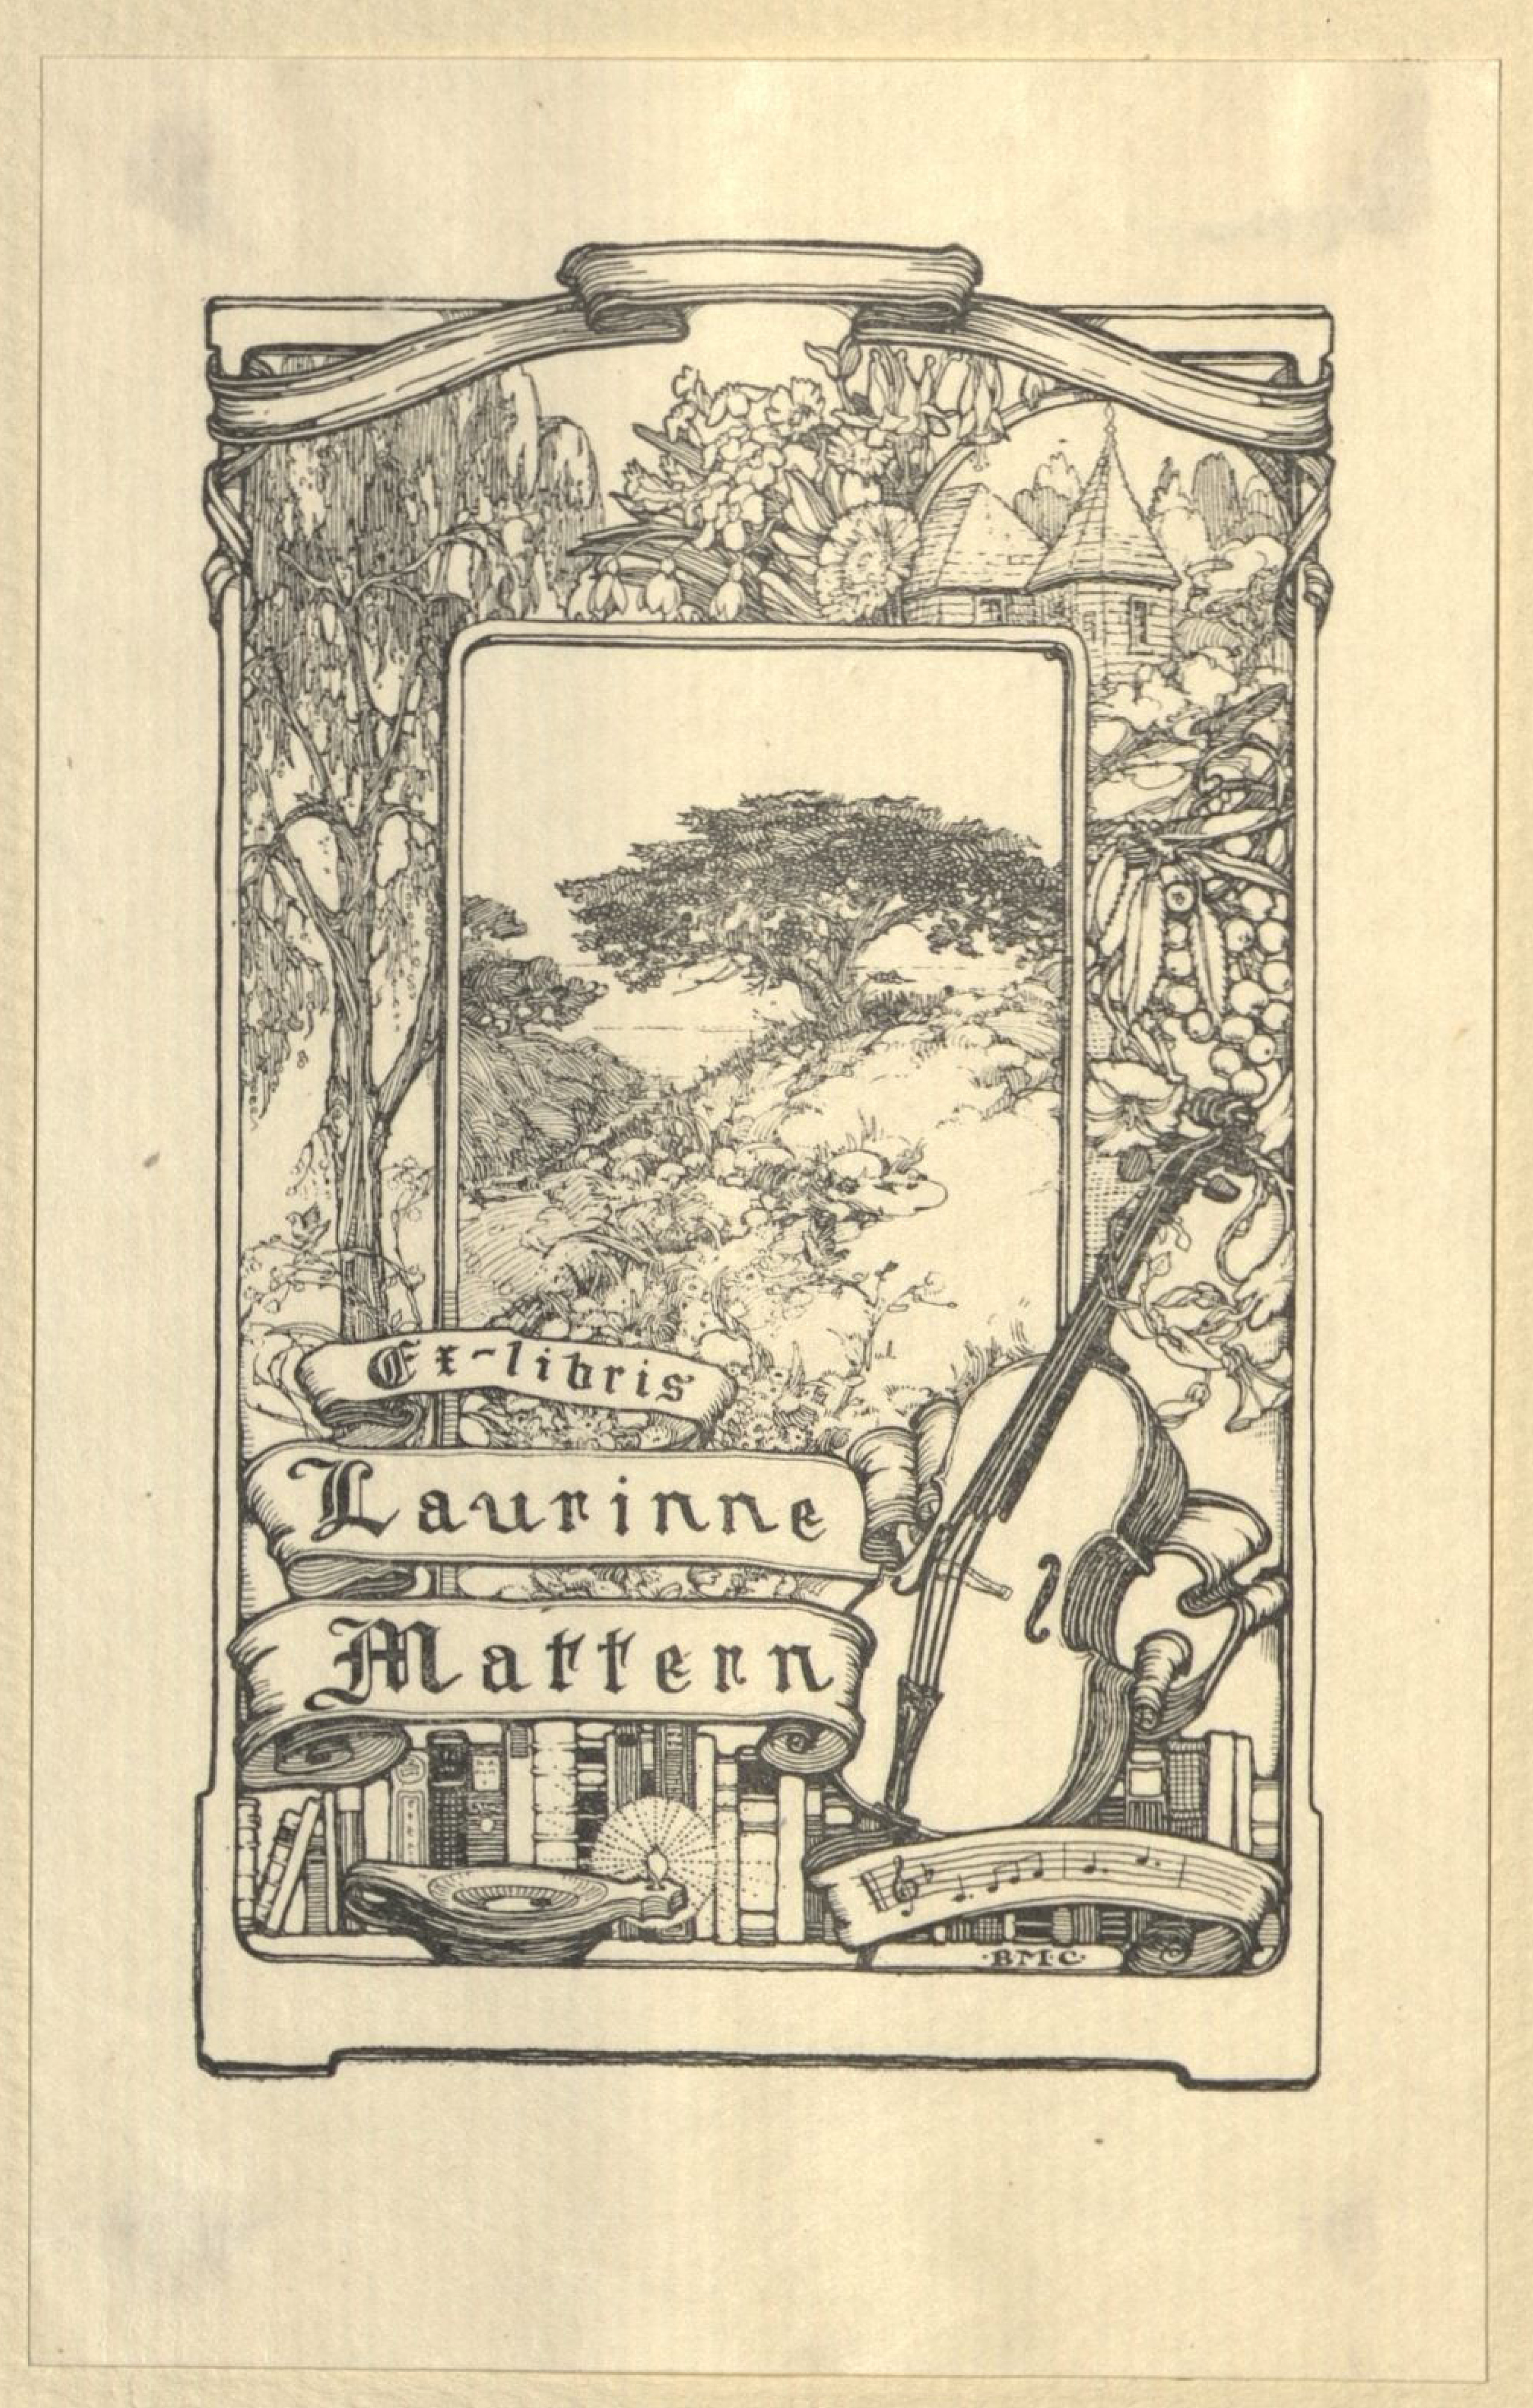 Bookplate of Laurinne Mattern.